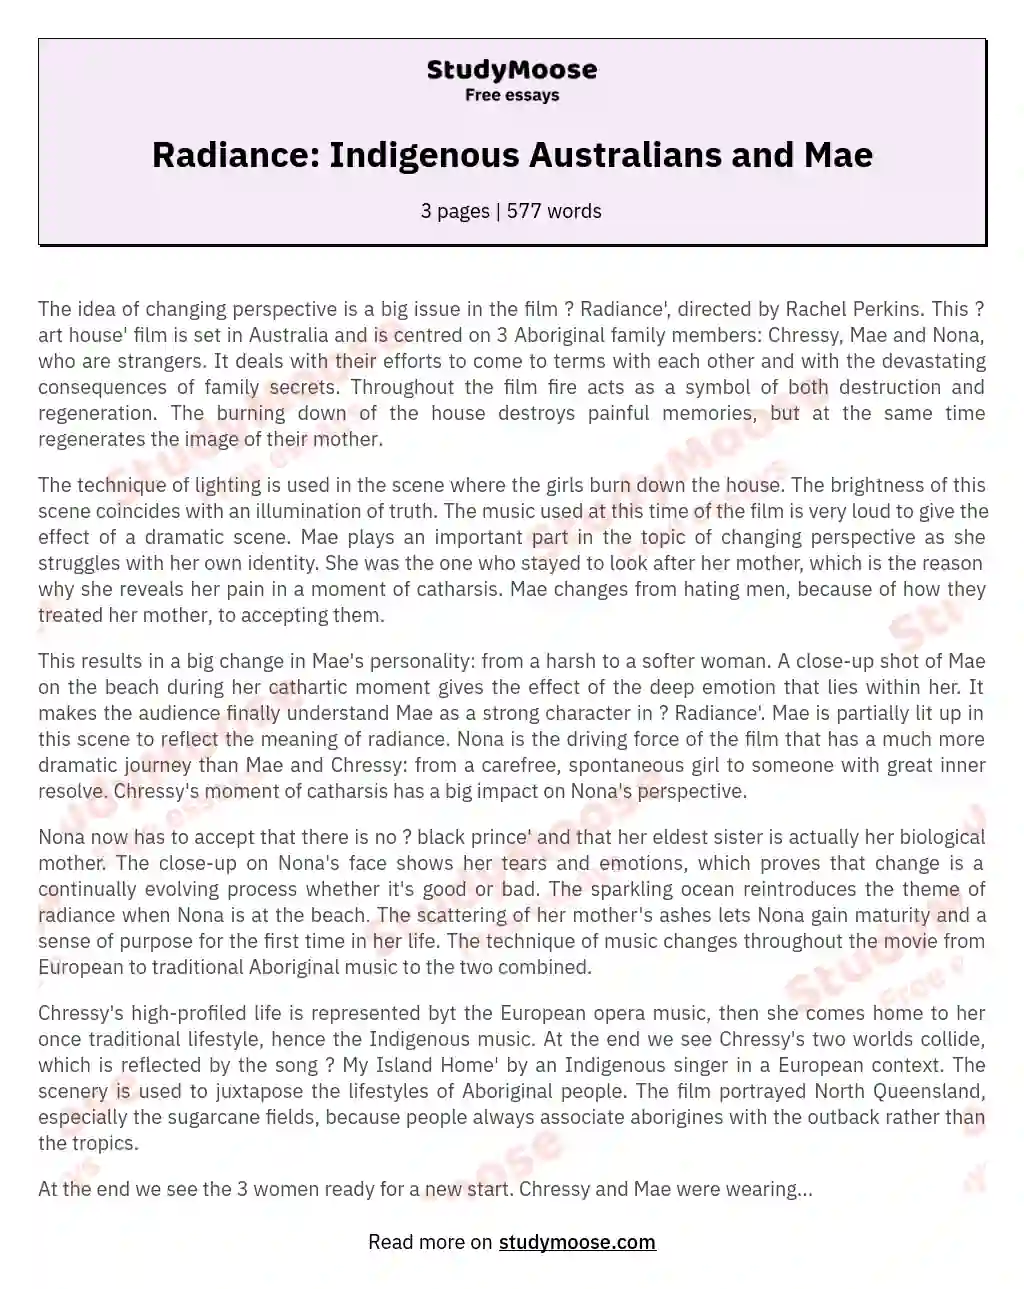 Radiance: Indigenous Australians and Mae essay